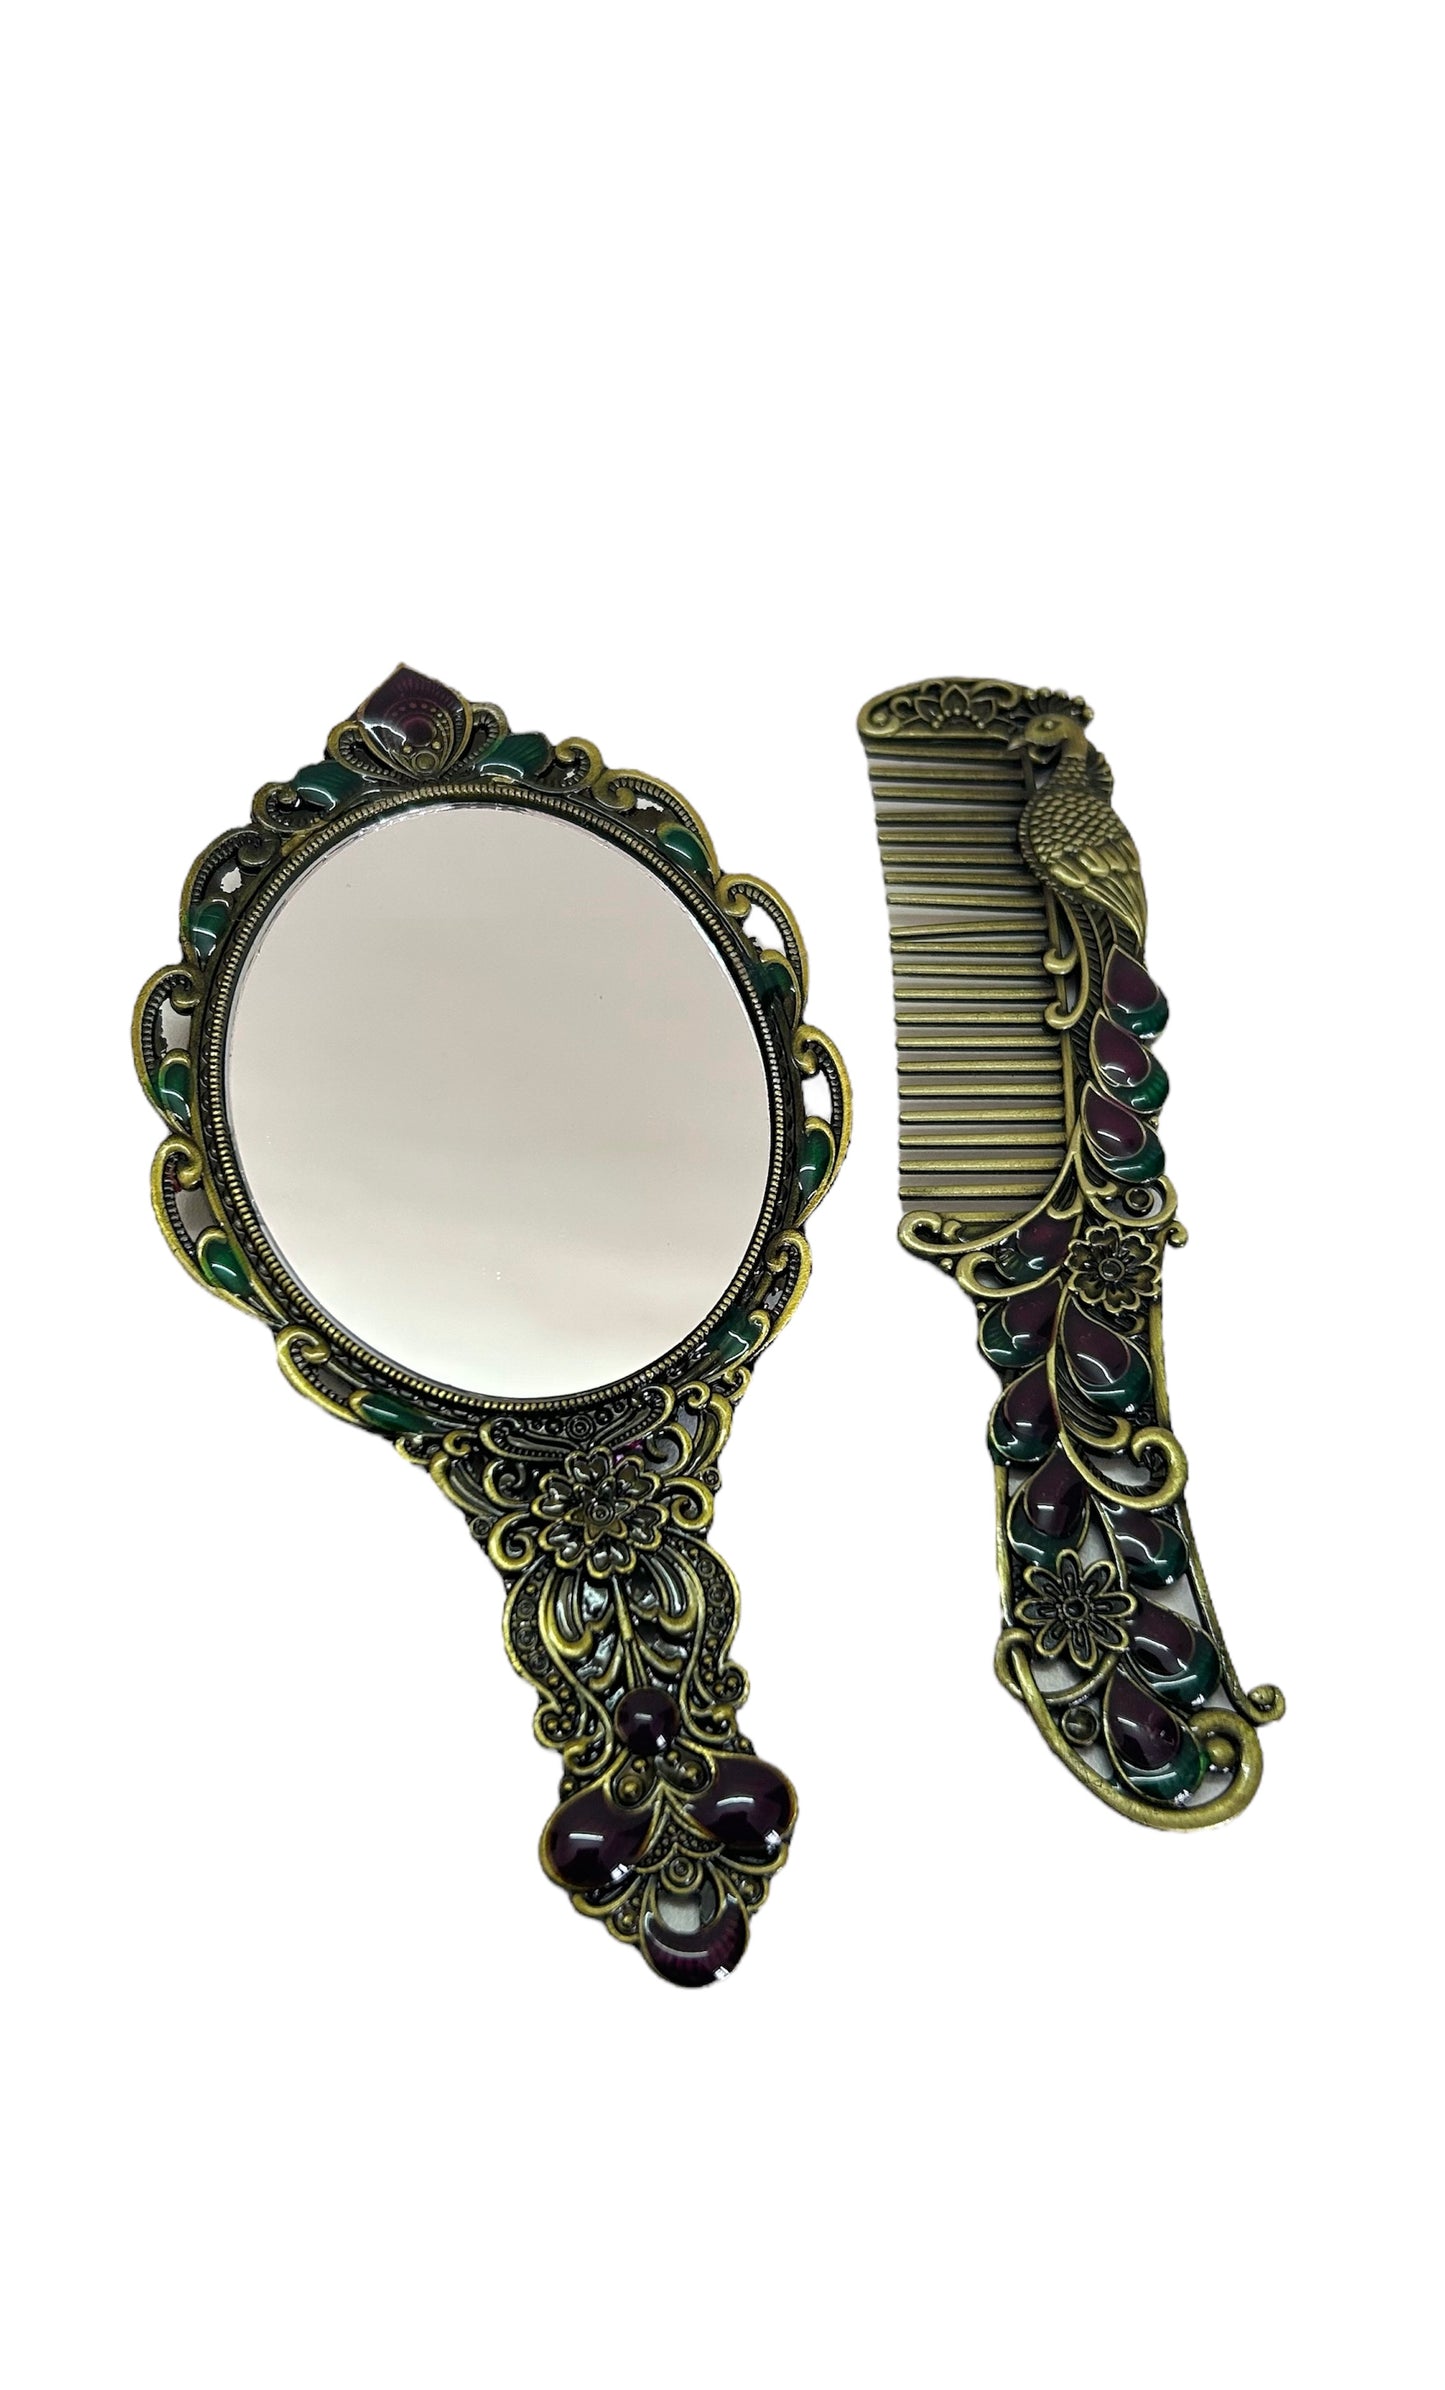 Peacock comb mirror set